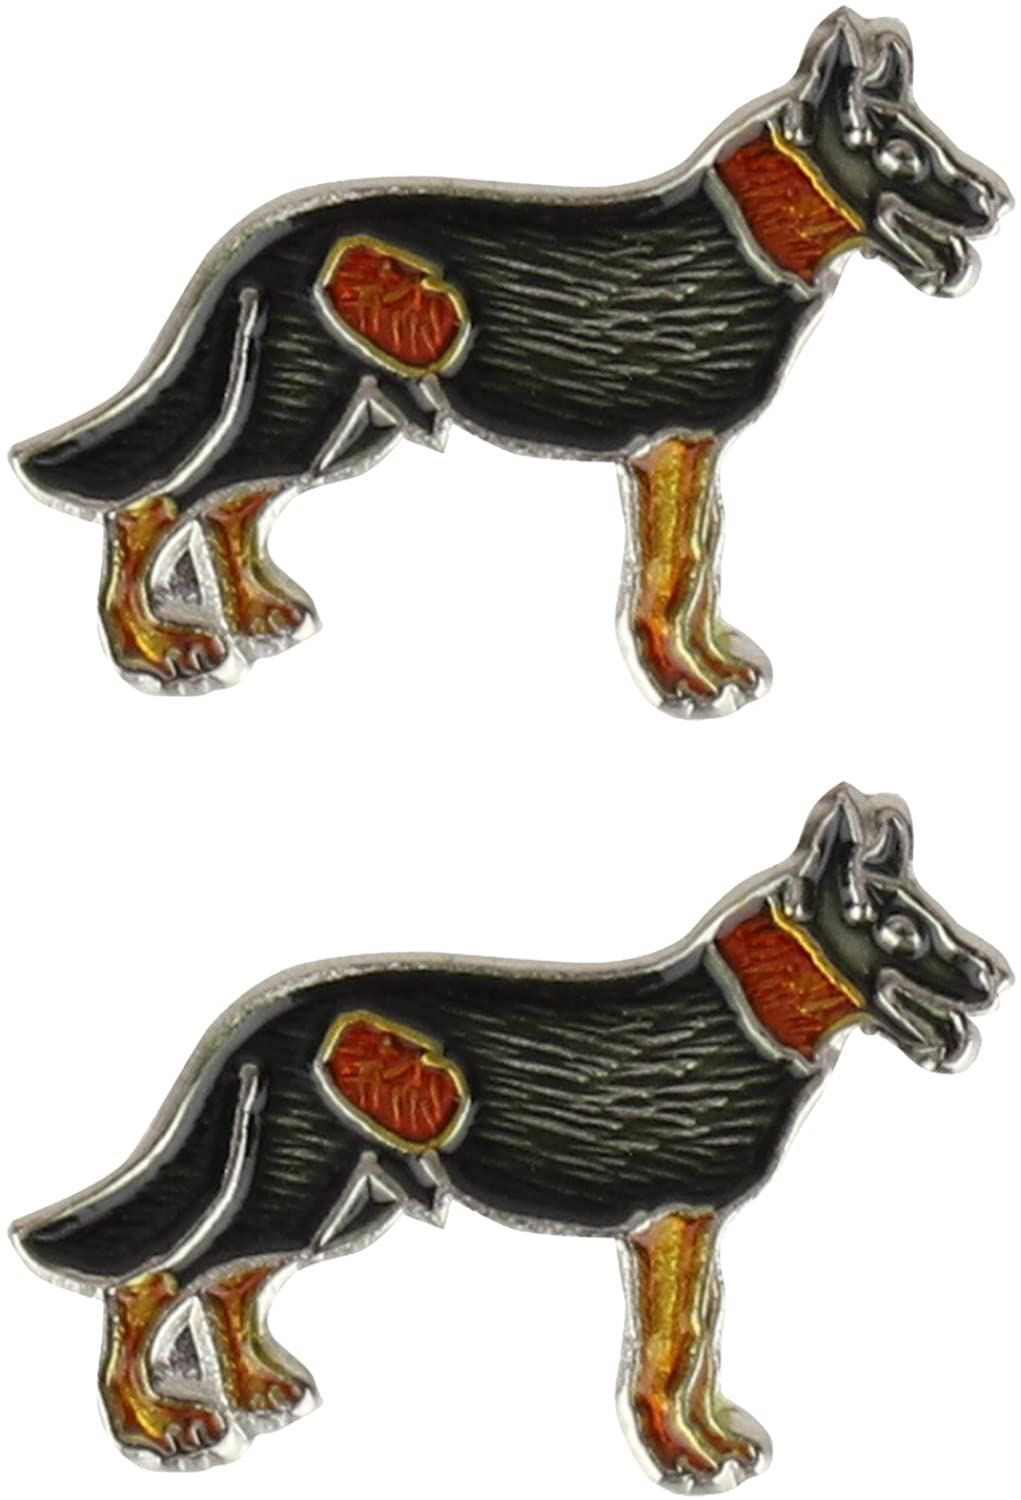 Armycrew Metallic German Shepherd Dog Badge Lapel Pins 2 Pack Set